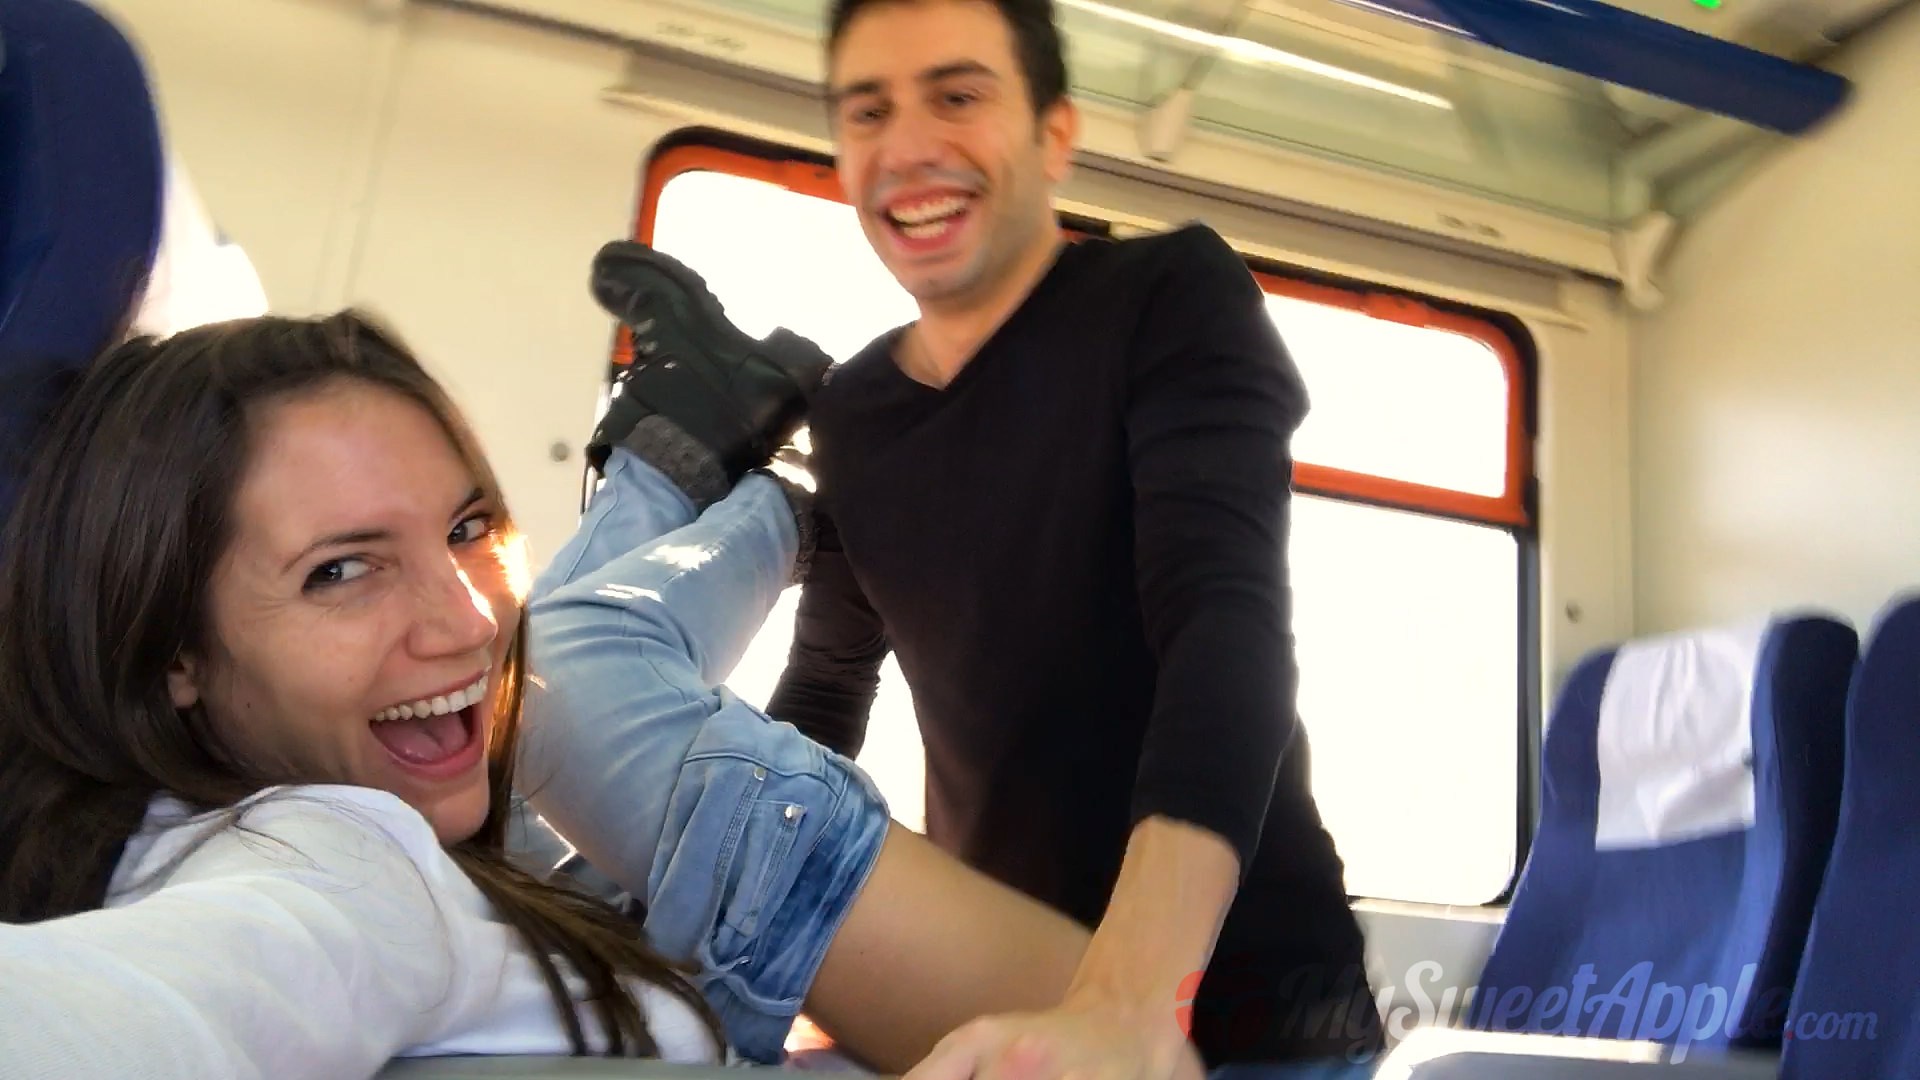 Sex on camera in a train car (72 photos)